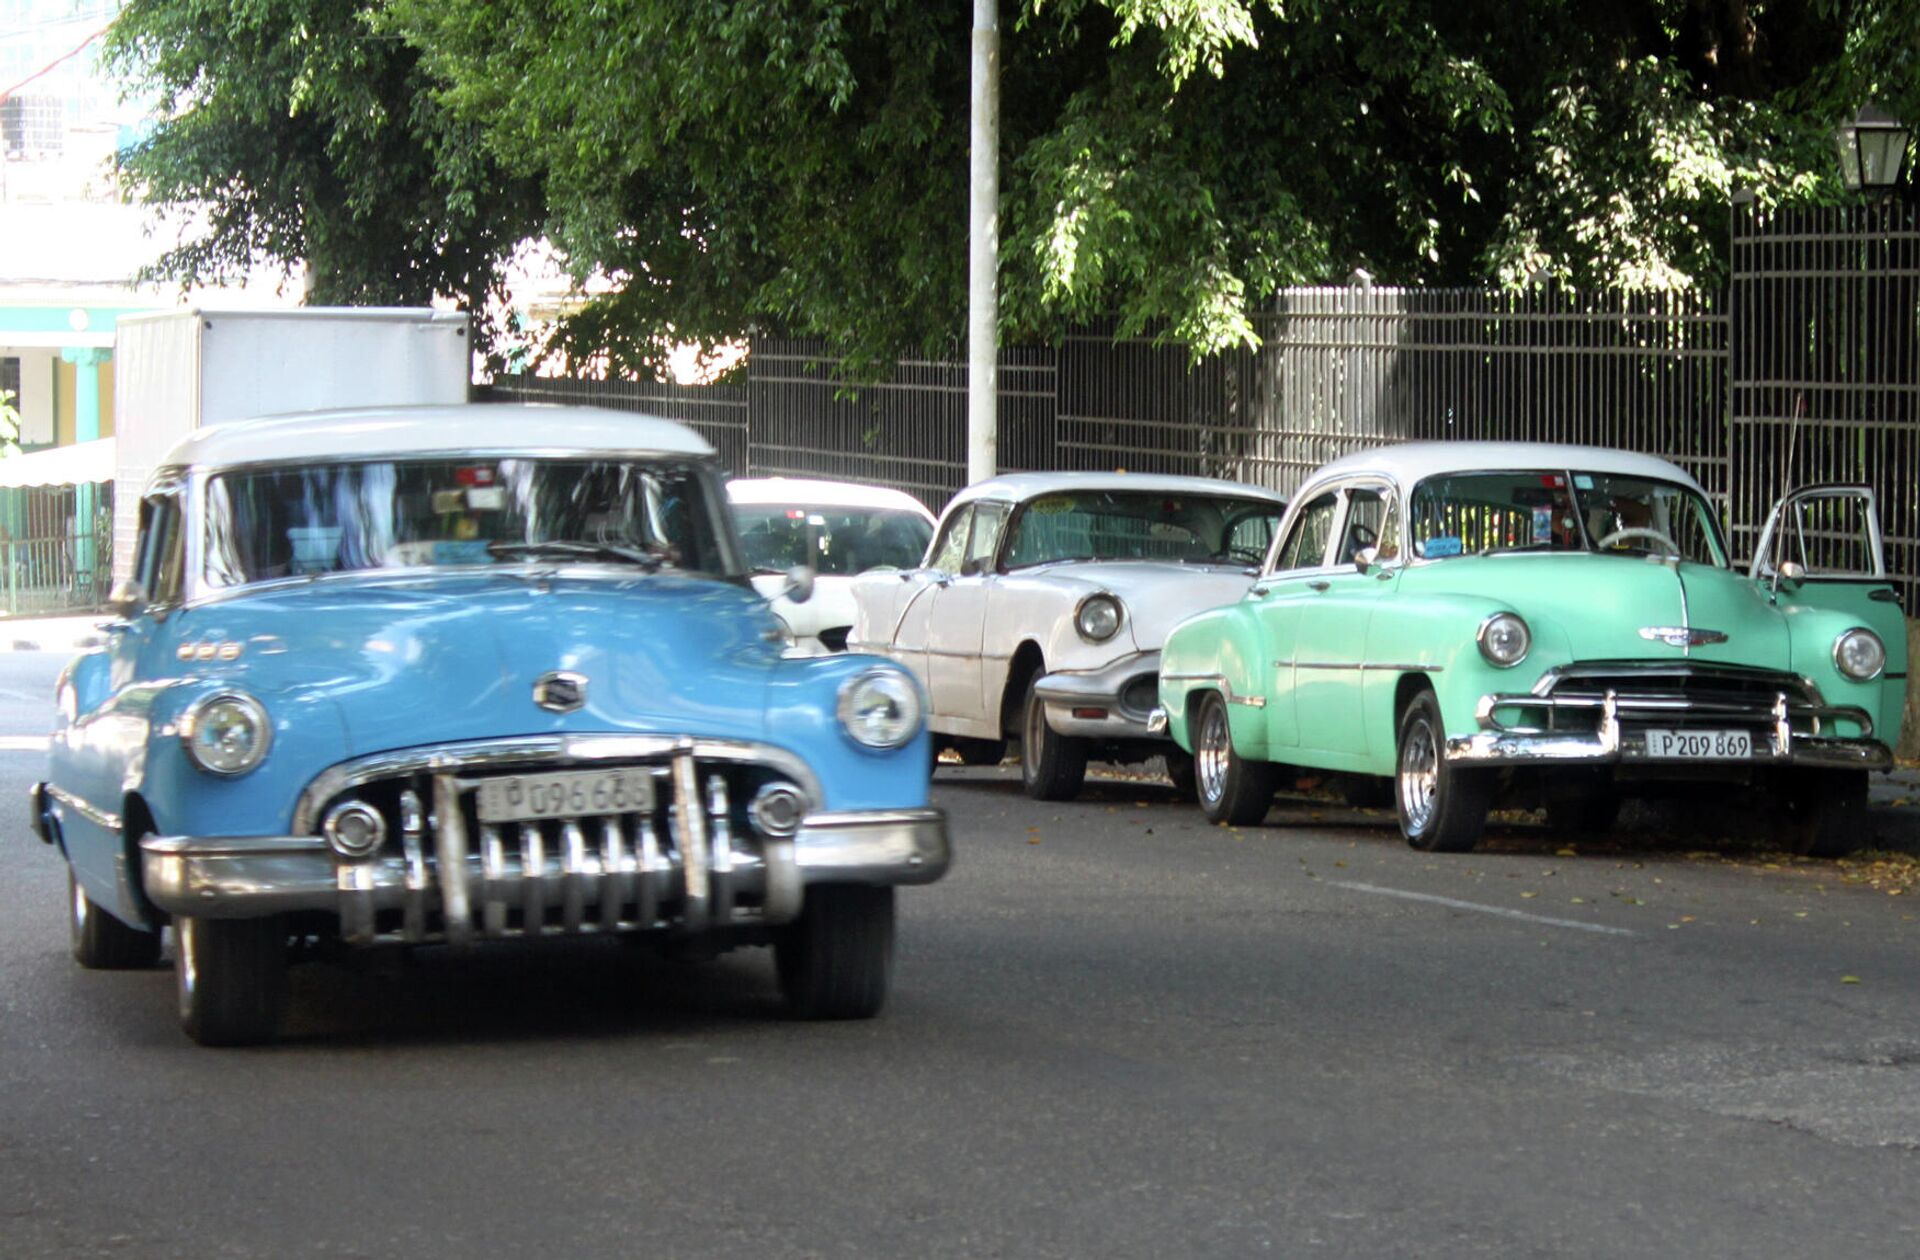 Autos de fabricación estadounidense con más de 65 años de explotación que aun circulan por las calles de Cuba - Sputnik Mundo, 1920, 05.10.2021